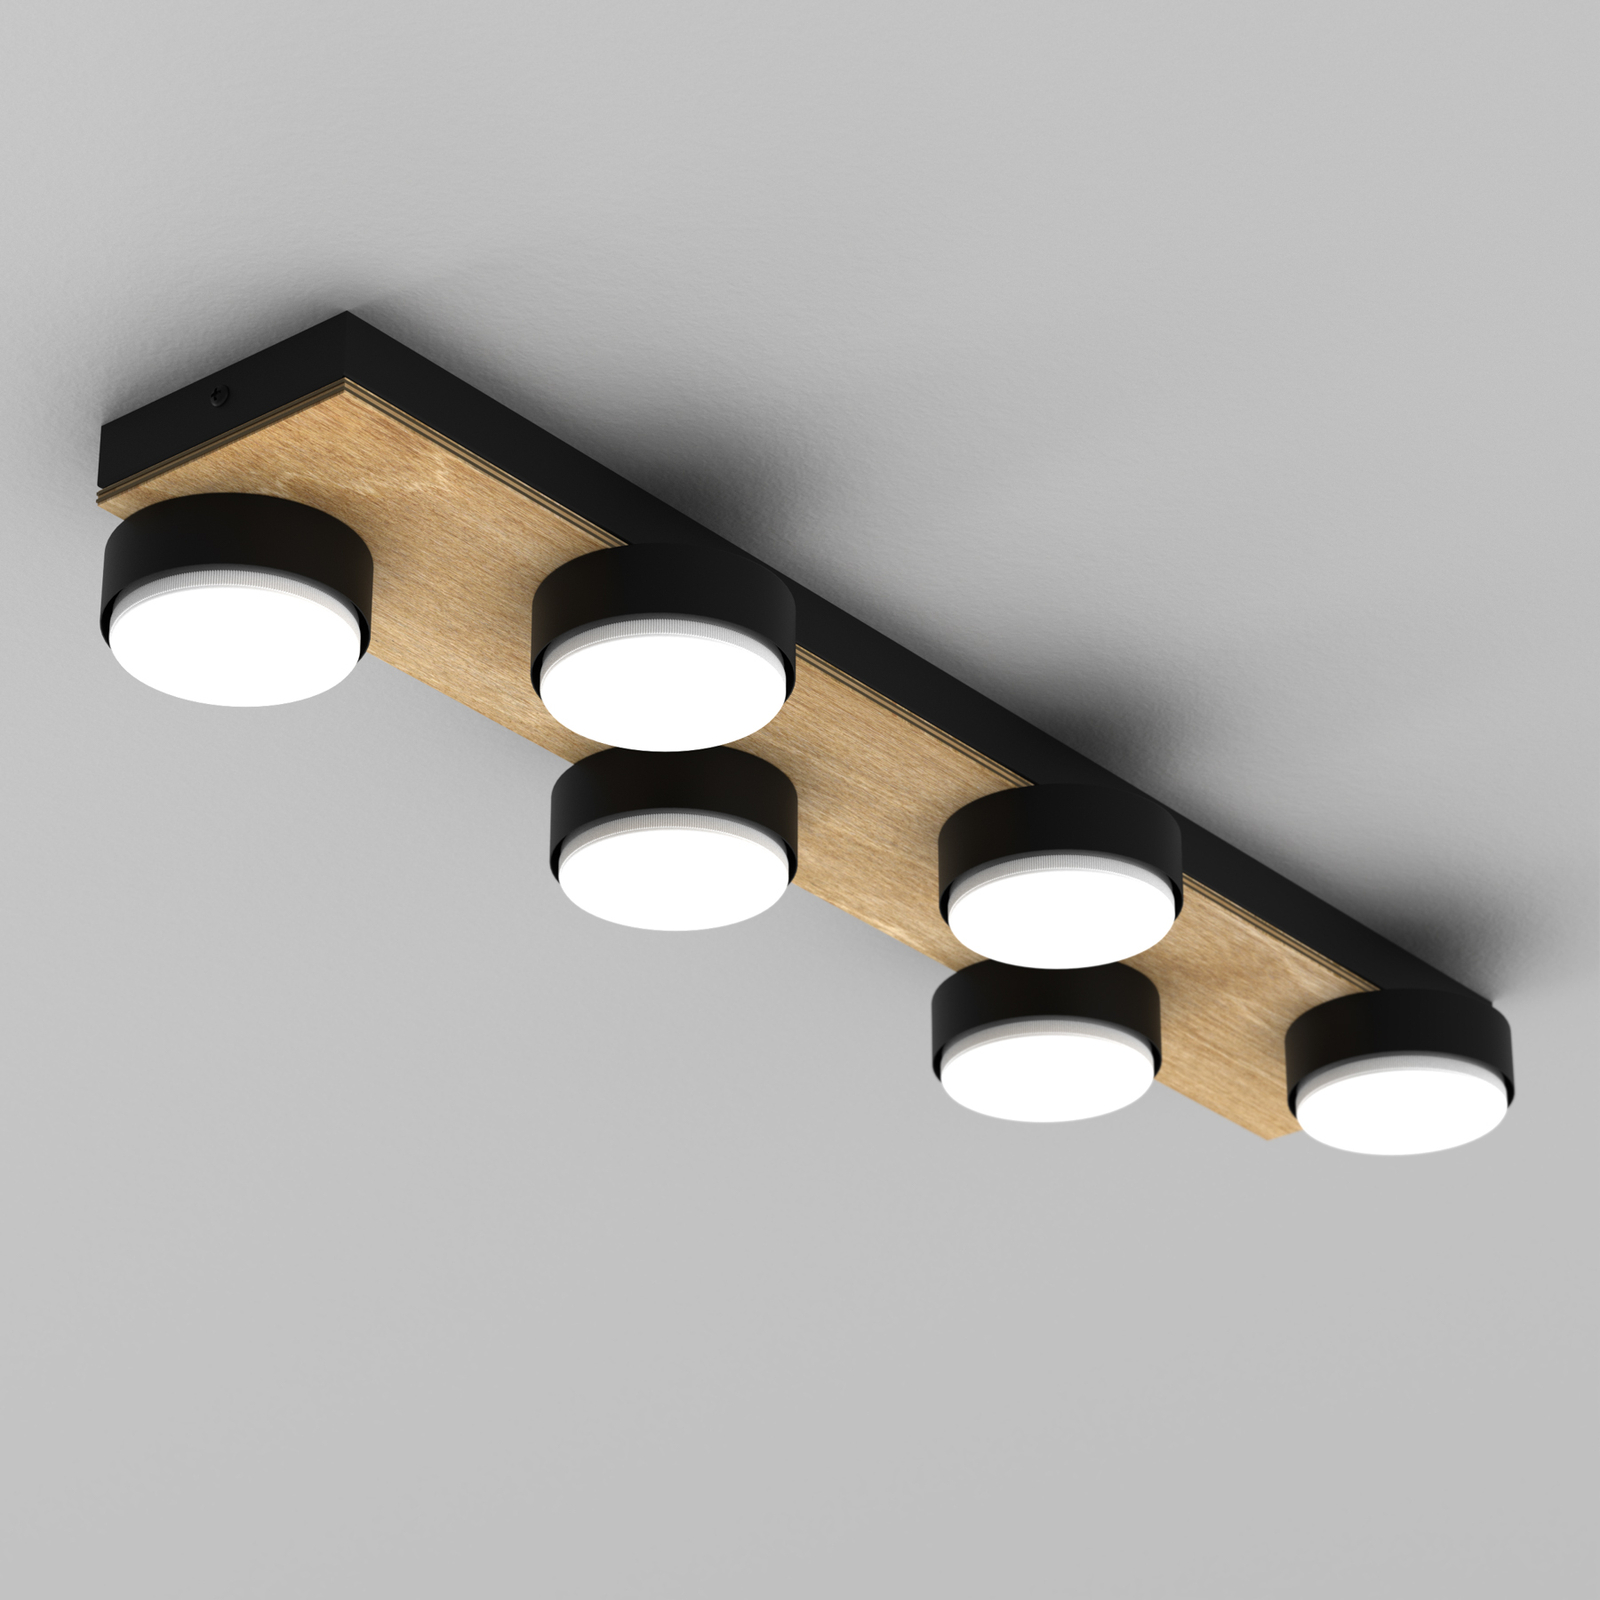 Envostar Laurent ceiling light with wood 6-bulb